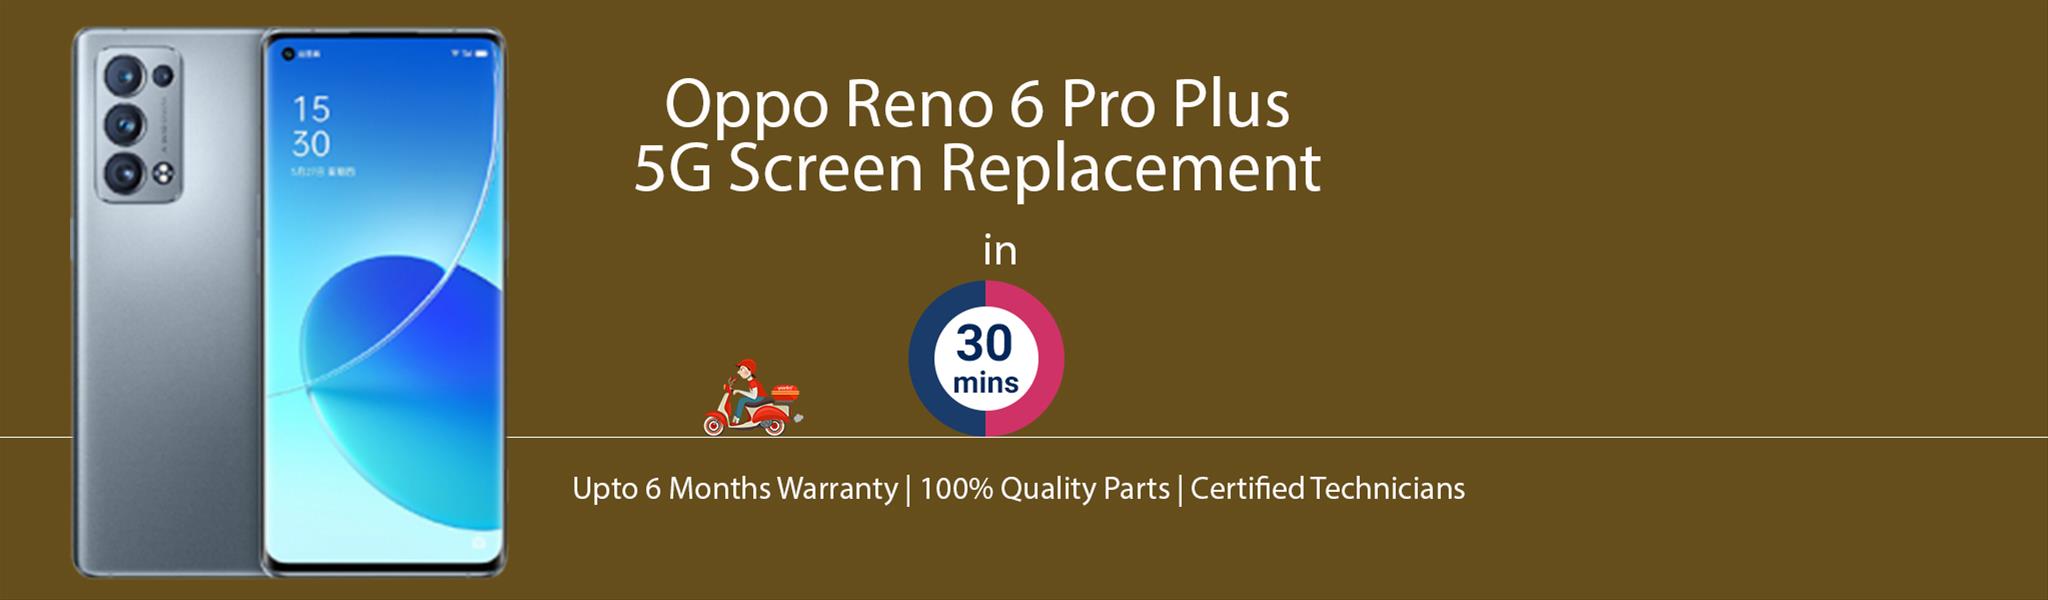 oppo-reno-6-pro-plus-5g-screen-replacement.jpg